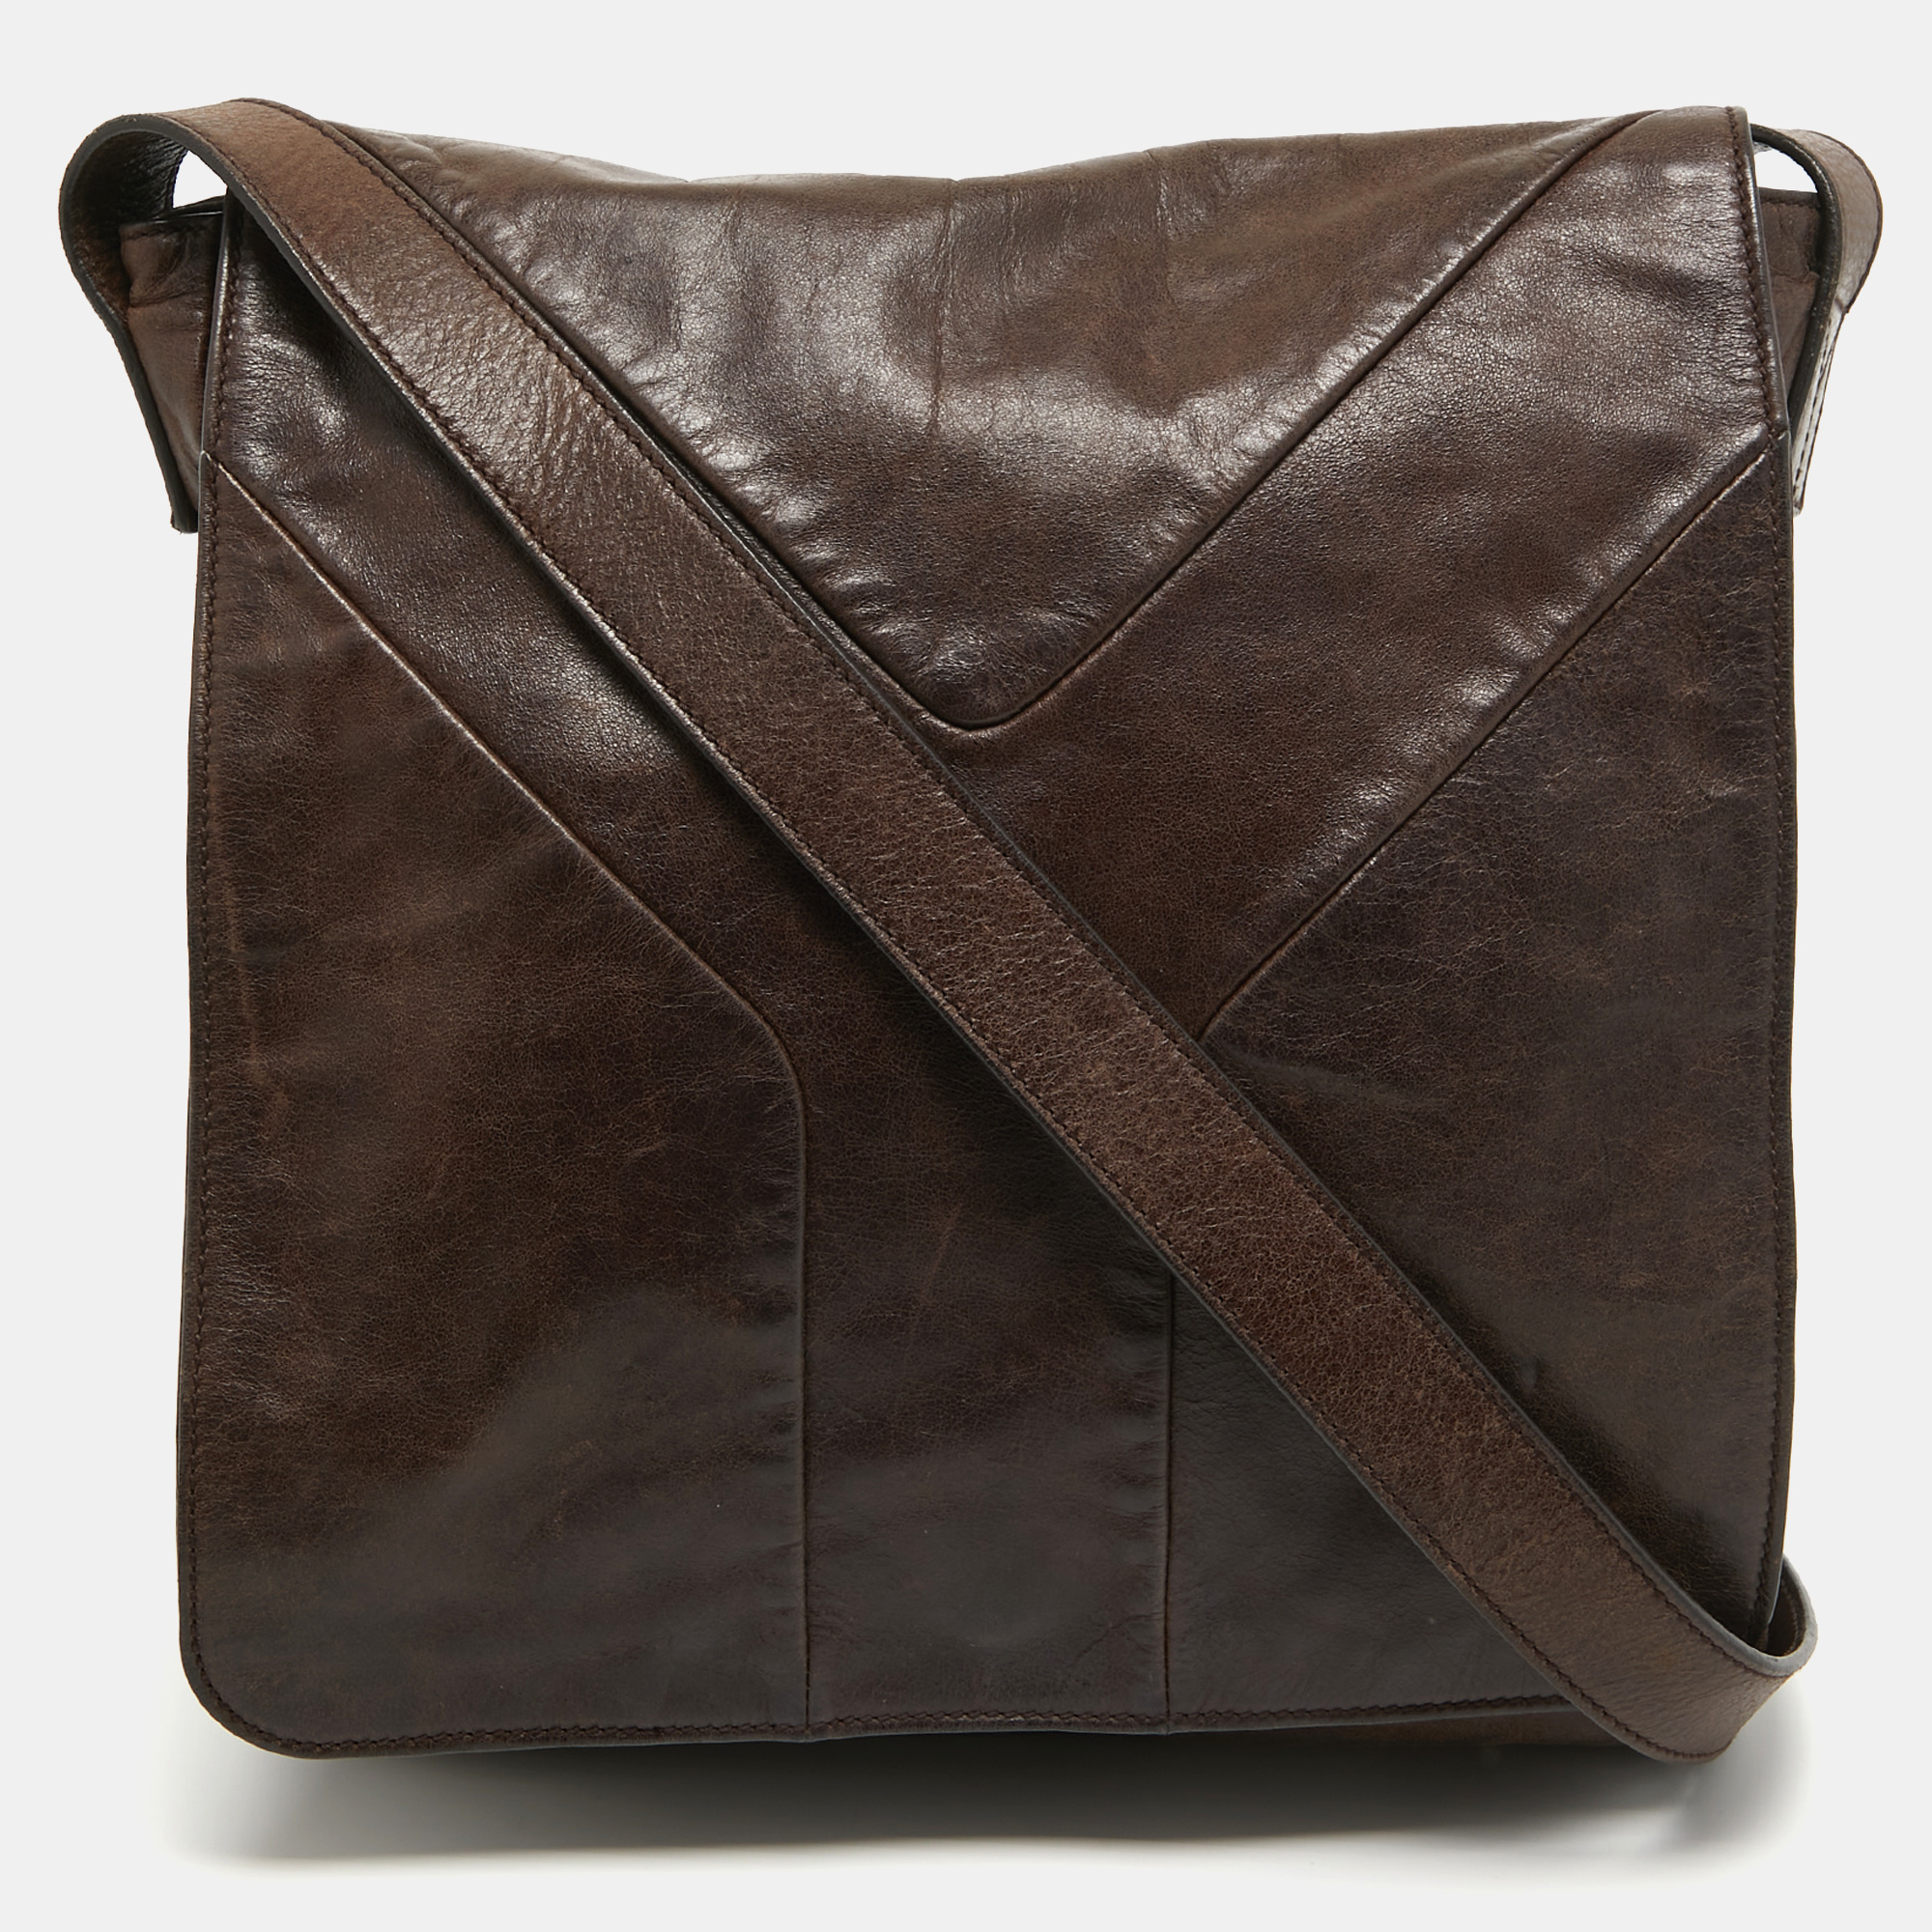 Yves Saint Laurent Dark Brown Leather Chyc Messenger Bag